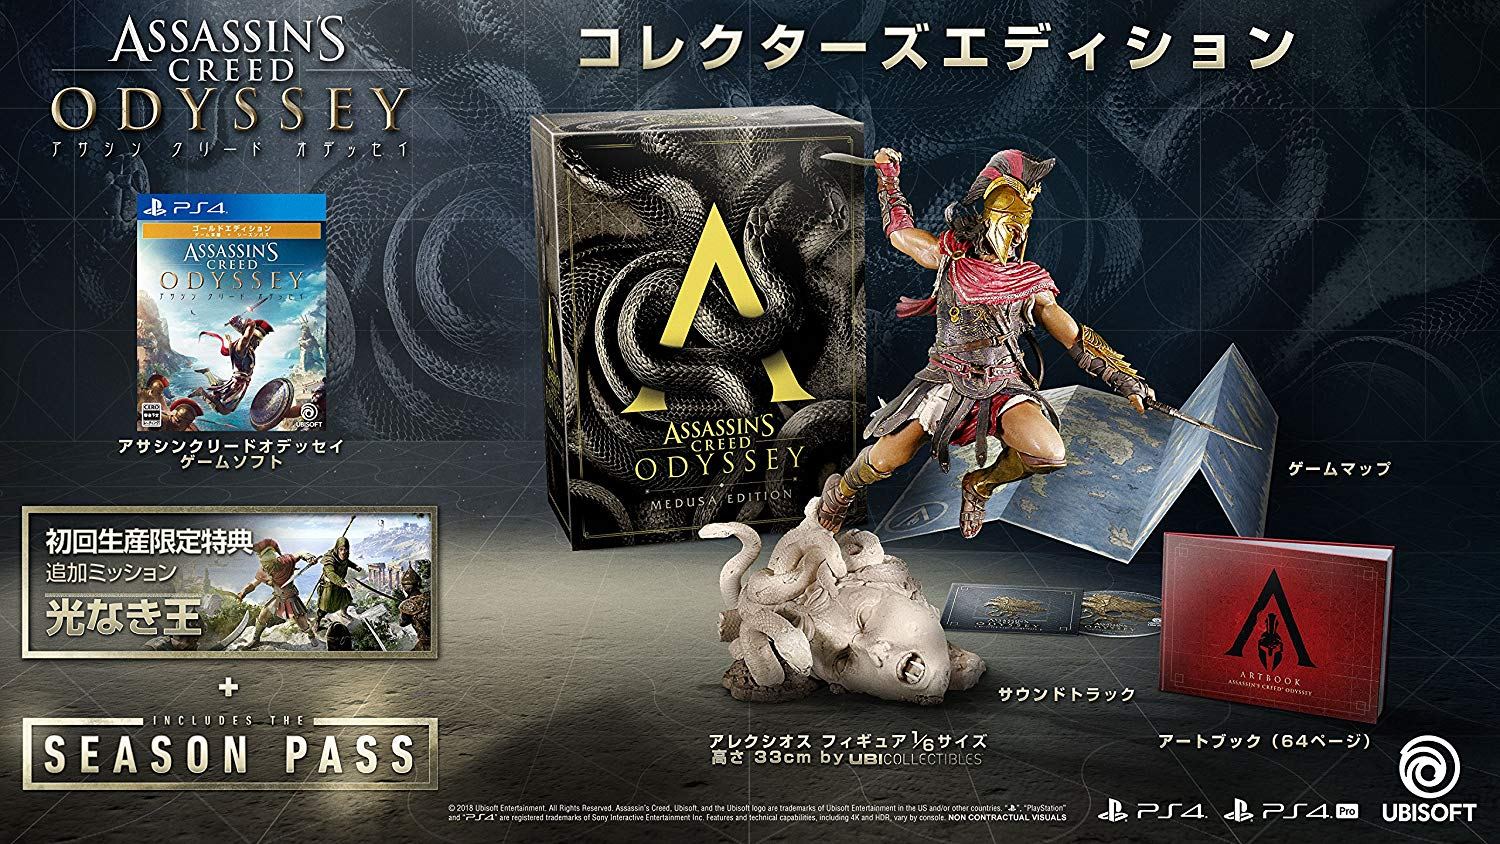 Magnetisk Bevise Klan Assassin's Creed Odyssey [Collector's Edition] for PlayStation 4